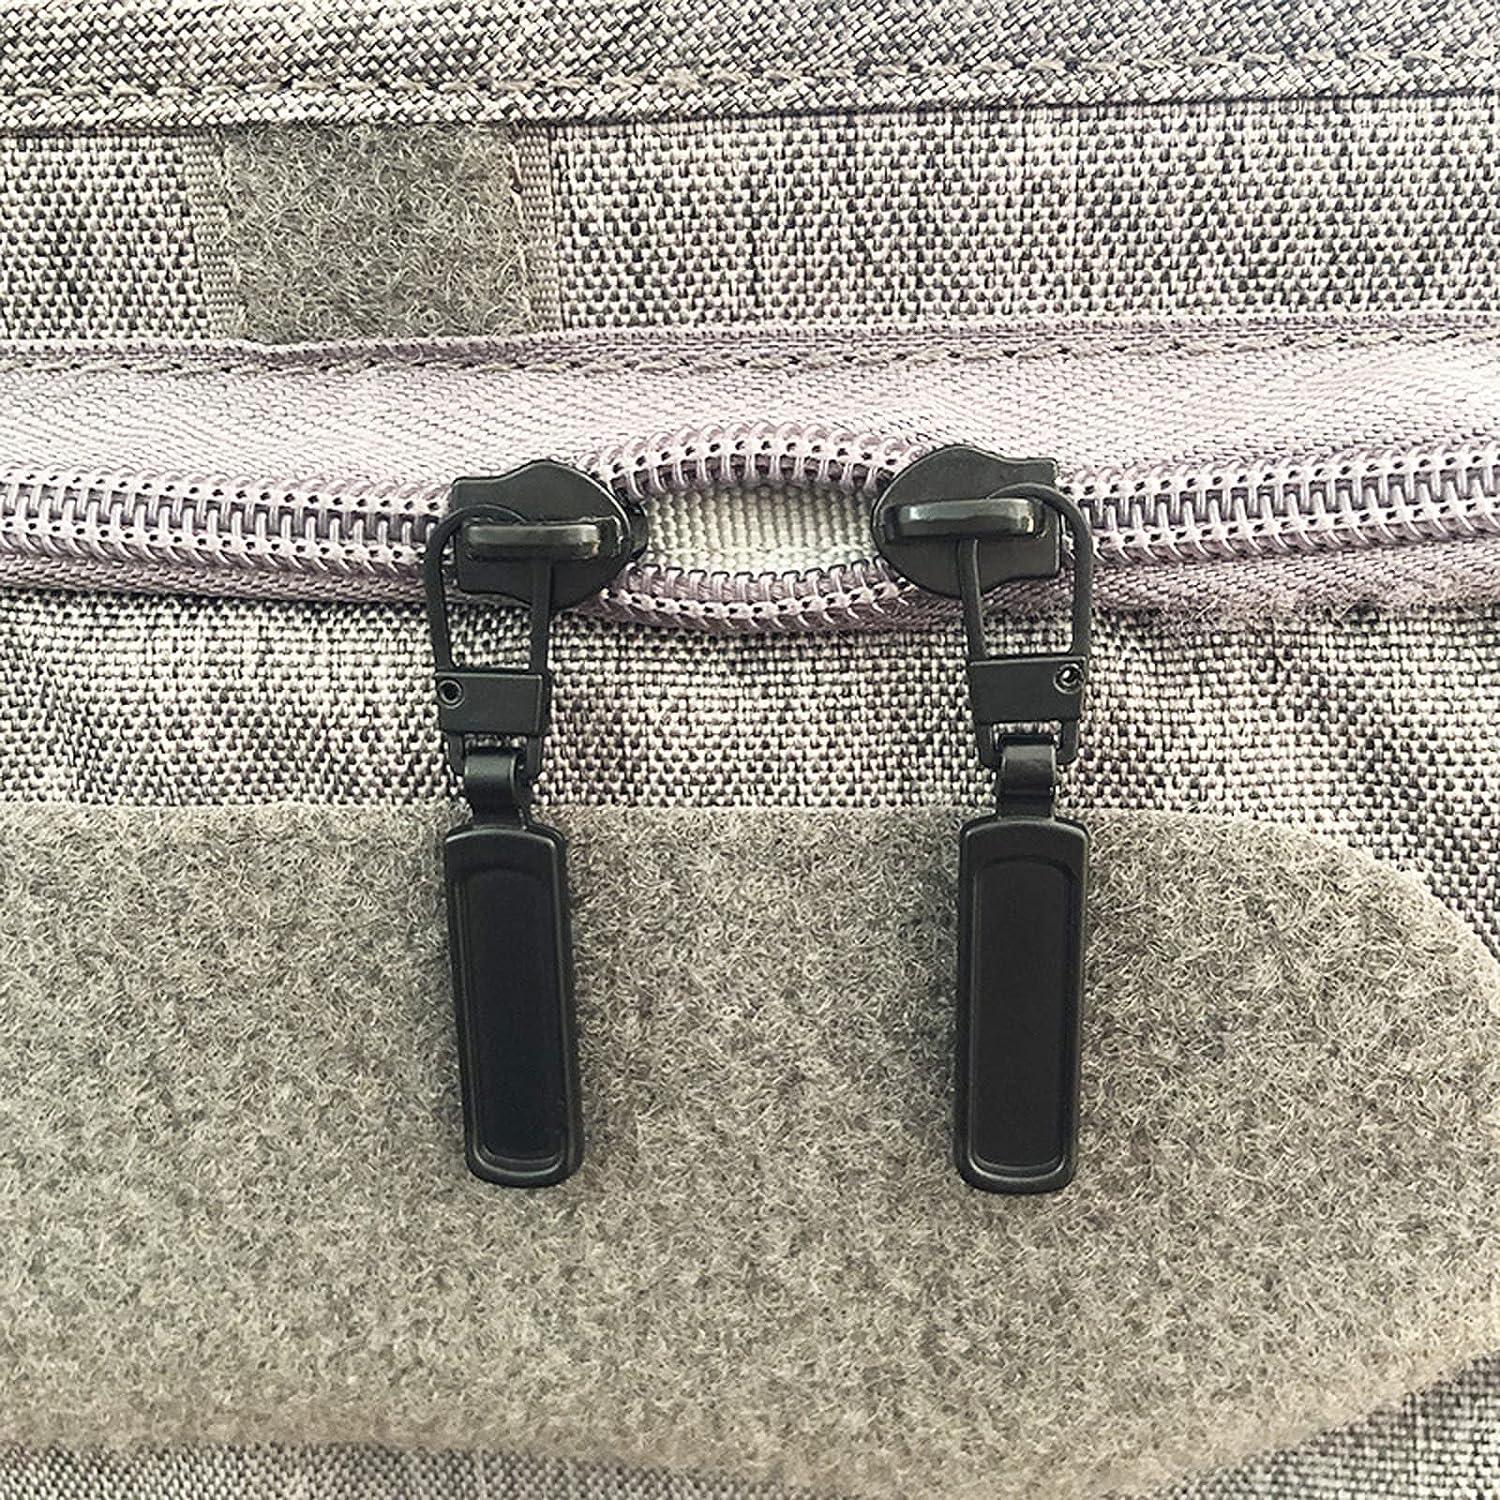 Mizeer Zipper Pull Replacement for Small Holes Zipper Detachable Zipper Tab Repair for Clothing Jackets Boots 4pcs Black